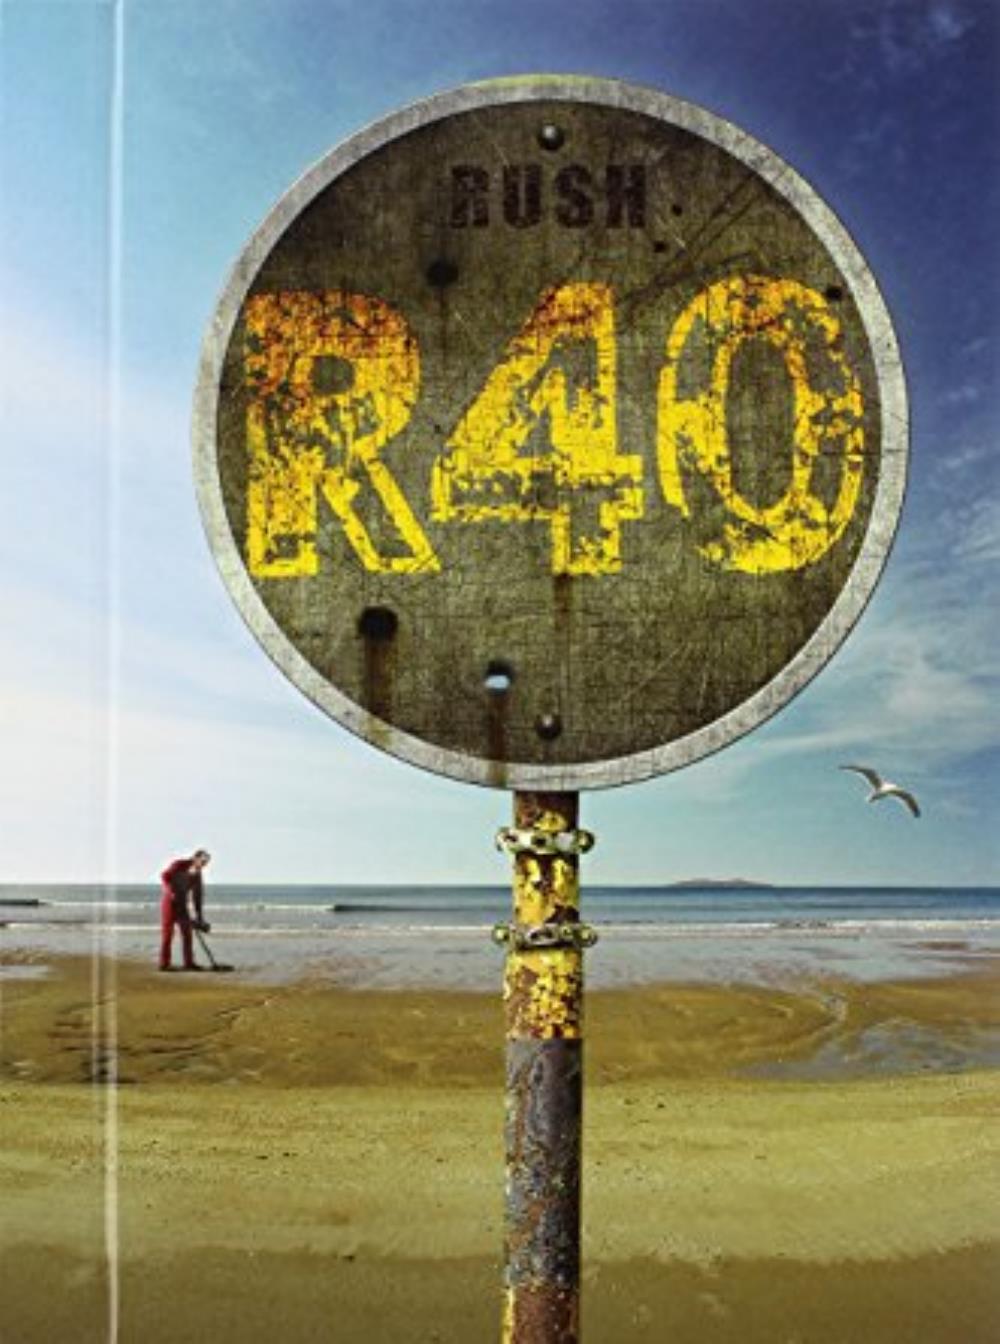 Rush - R 40 (DVD Box Set) CD (album) cover